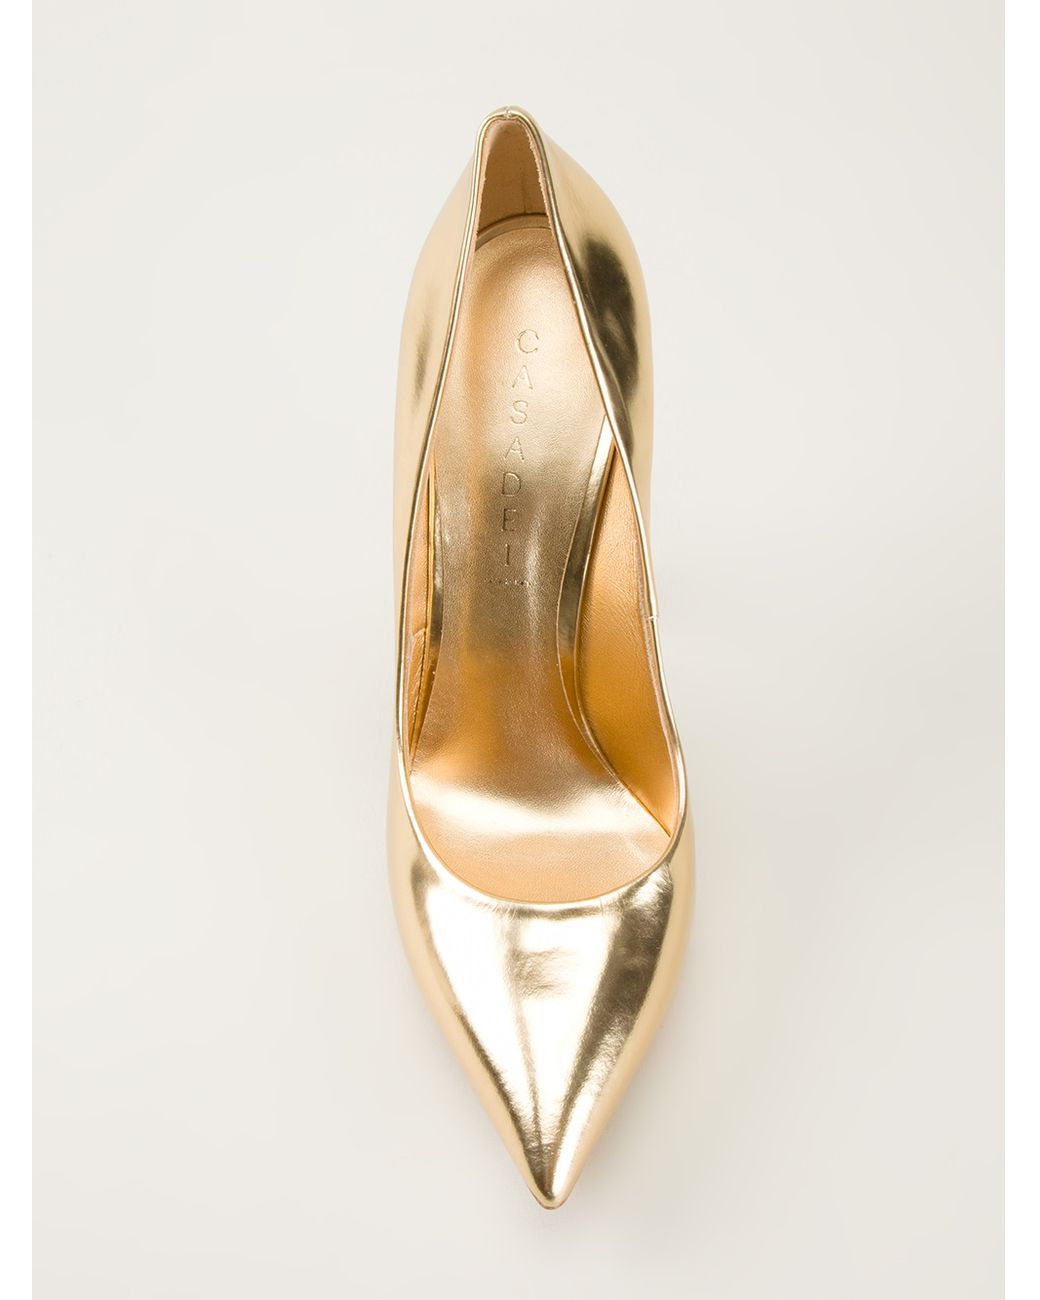 Gold High Heels - Rhinestone High Heel Sandals - Metallic Heels - Lulus